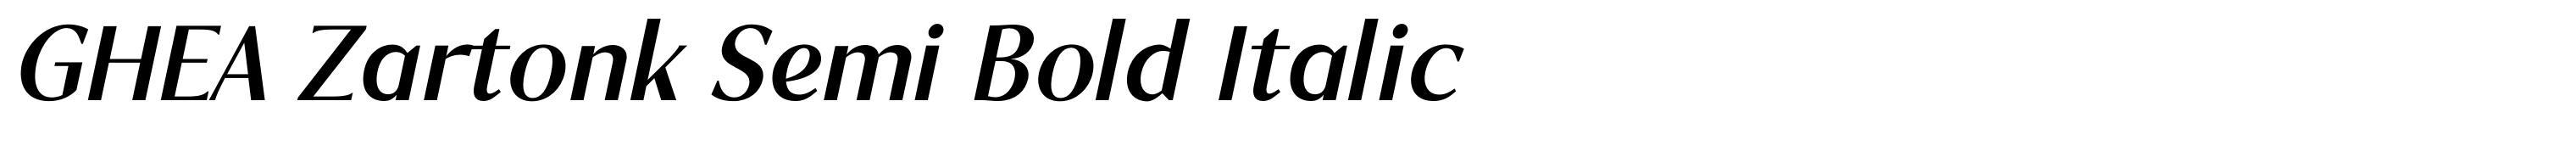 GHEA Zartonk Semi Bold Italic